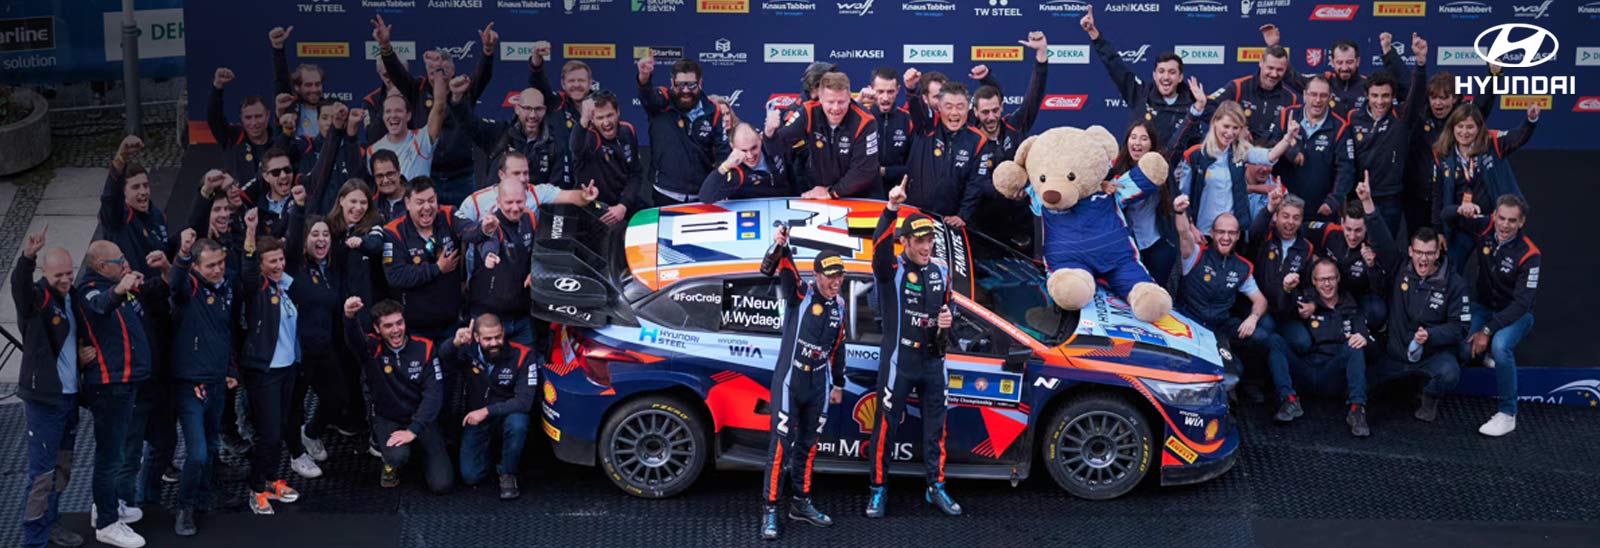 Thierry Neuville, Martijn Wydaeghe y equipo de WRC celebran triunfo en Rally de Europa Central